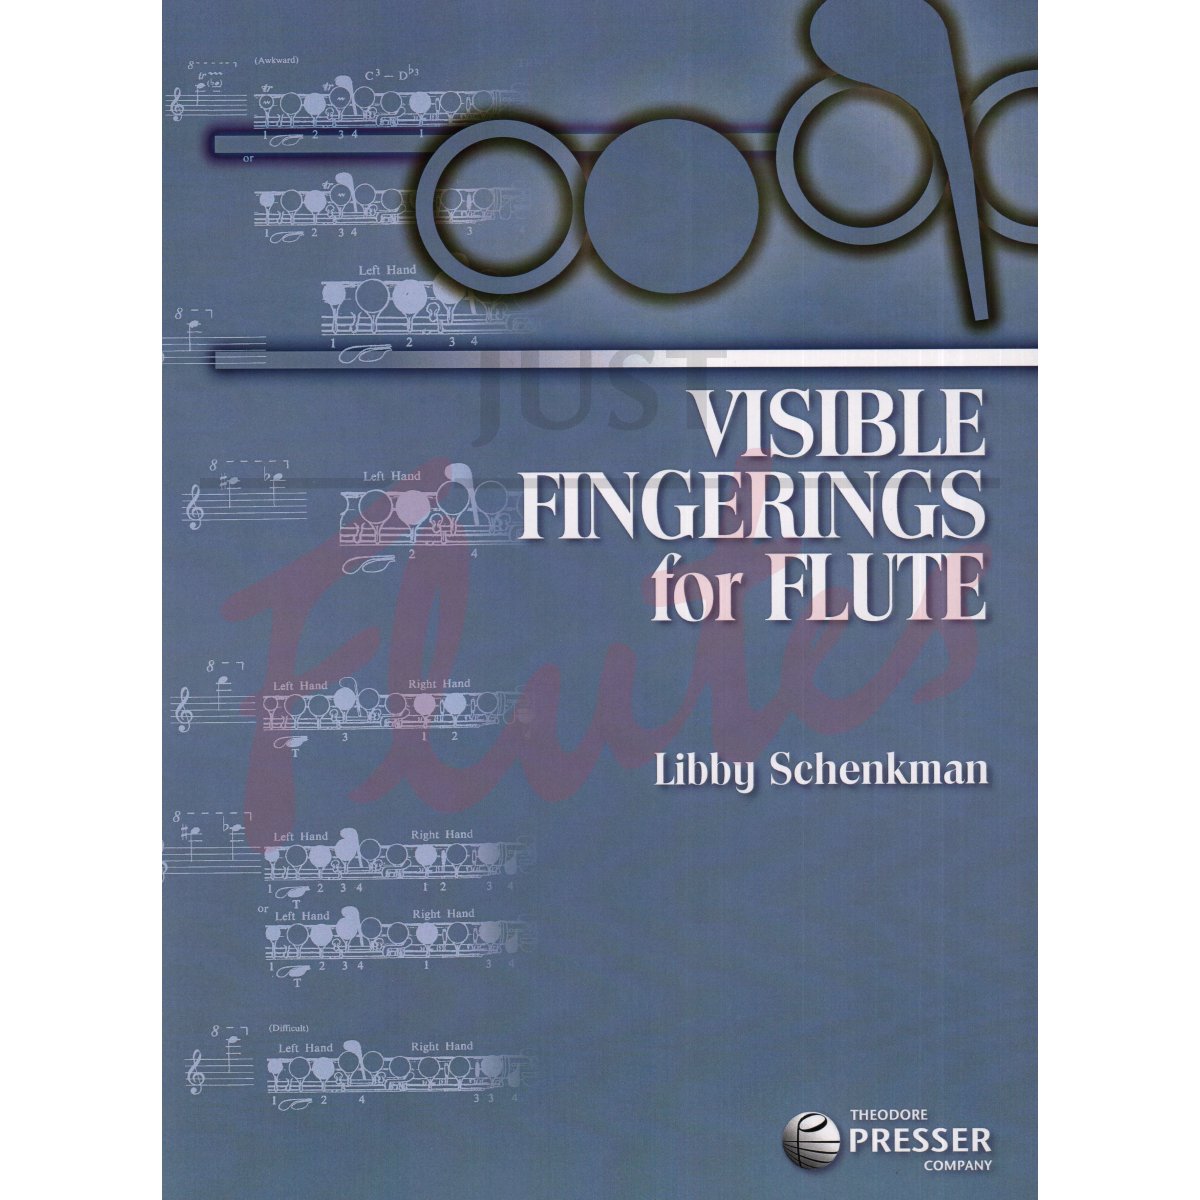 Visible Fingerings for Flute